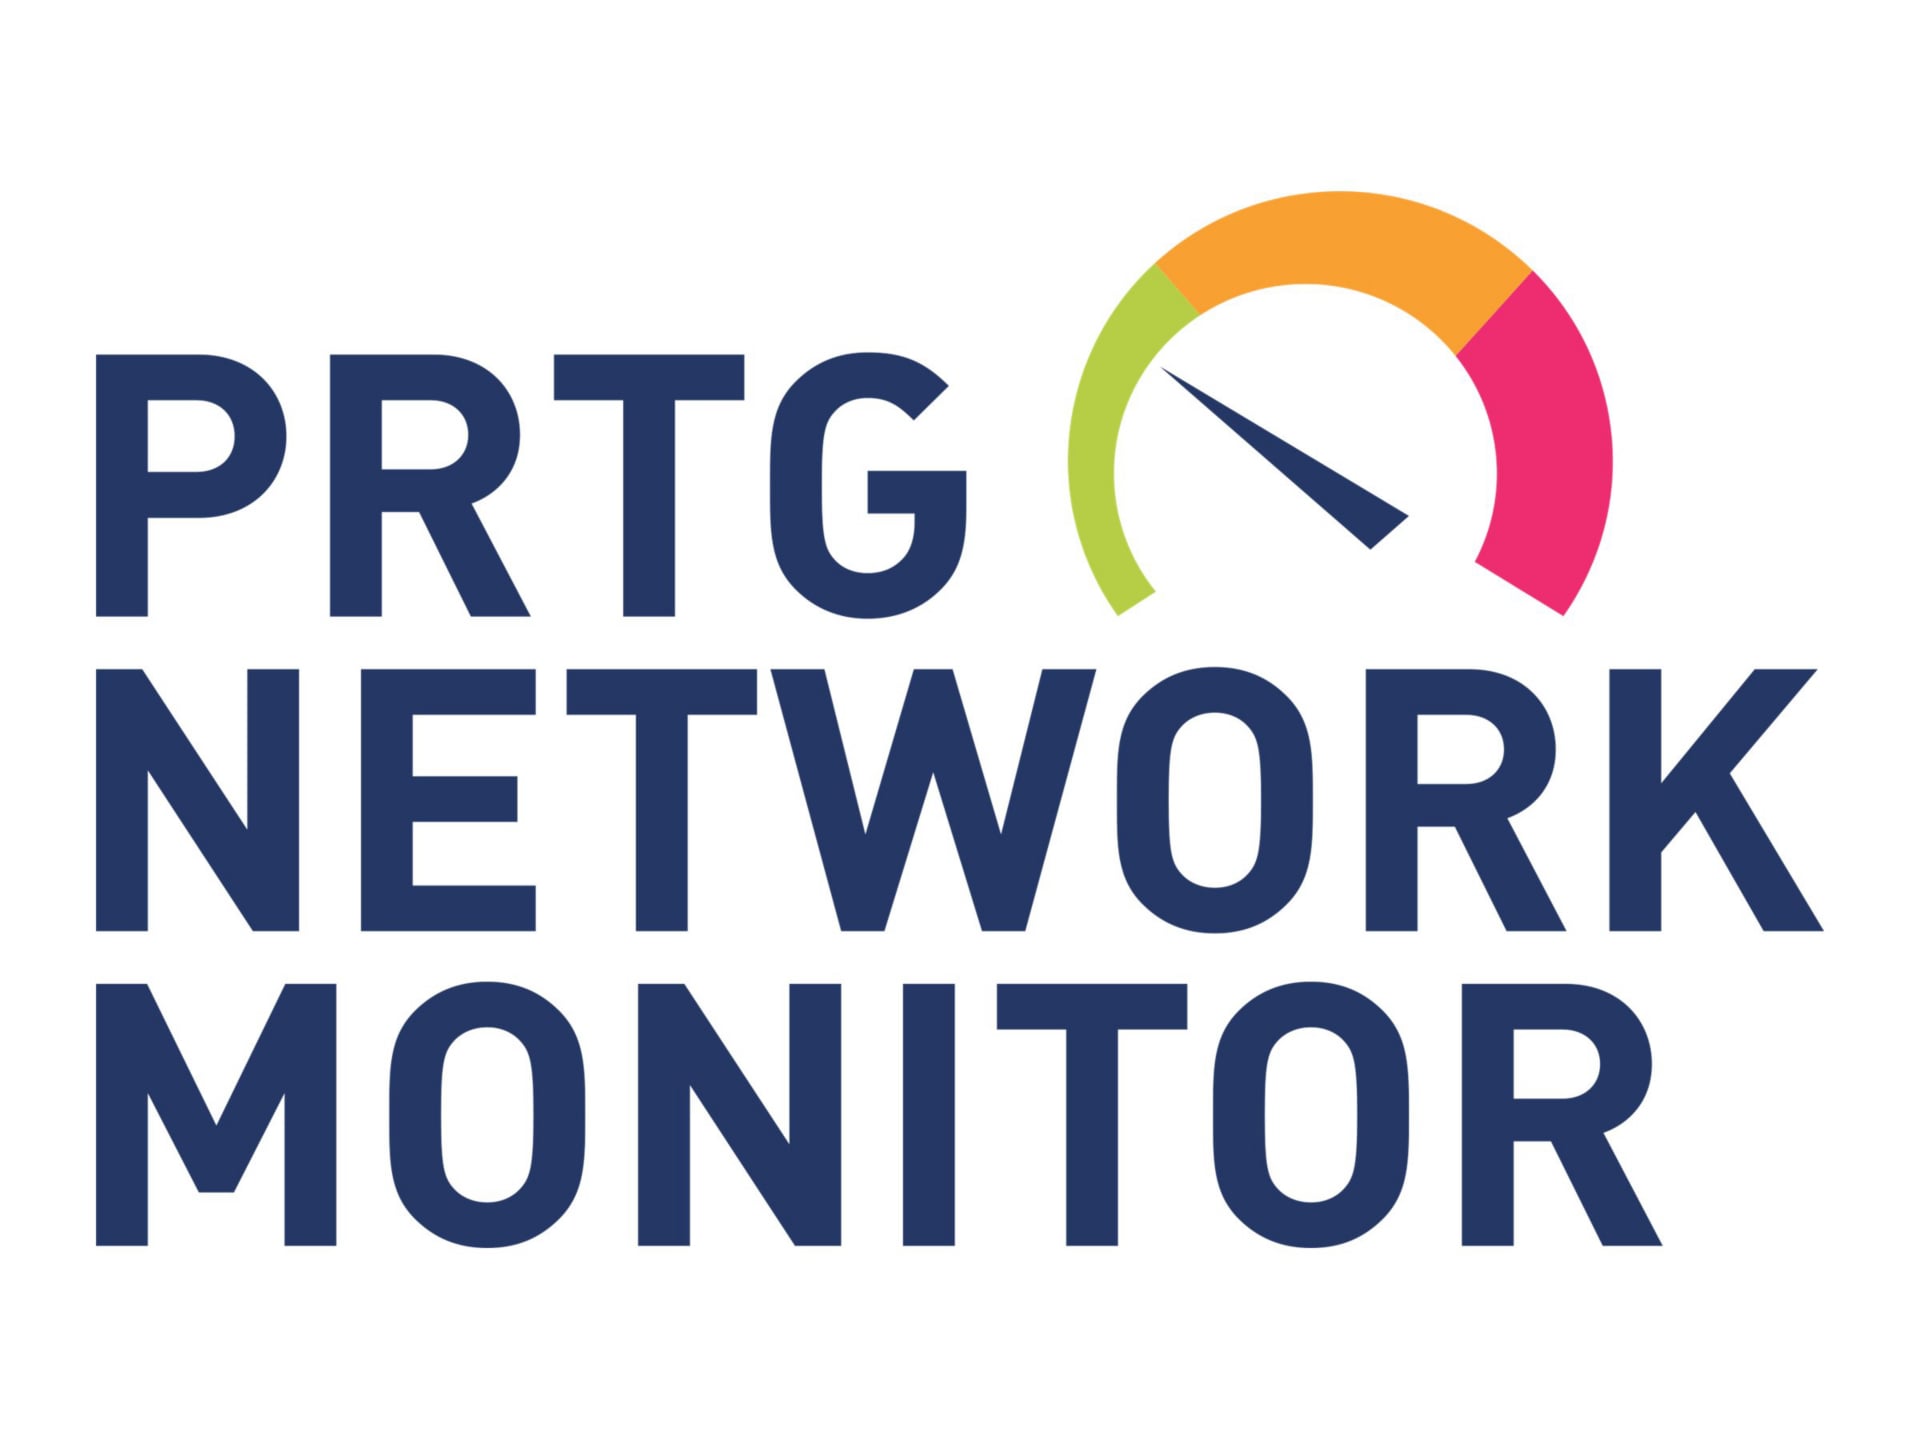 PRTG Network Monitor - license + Maintenance - 1000 sensors